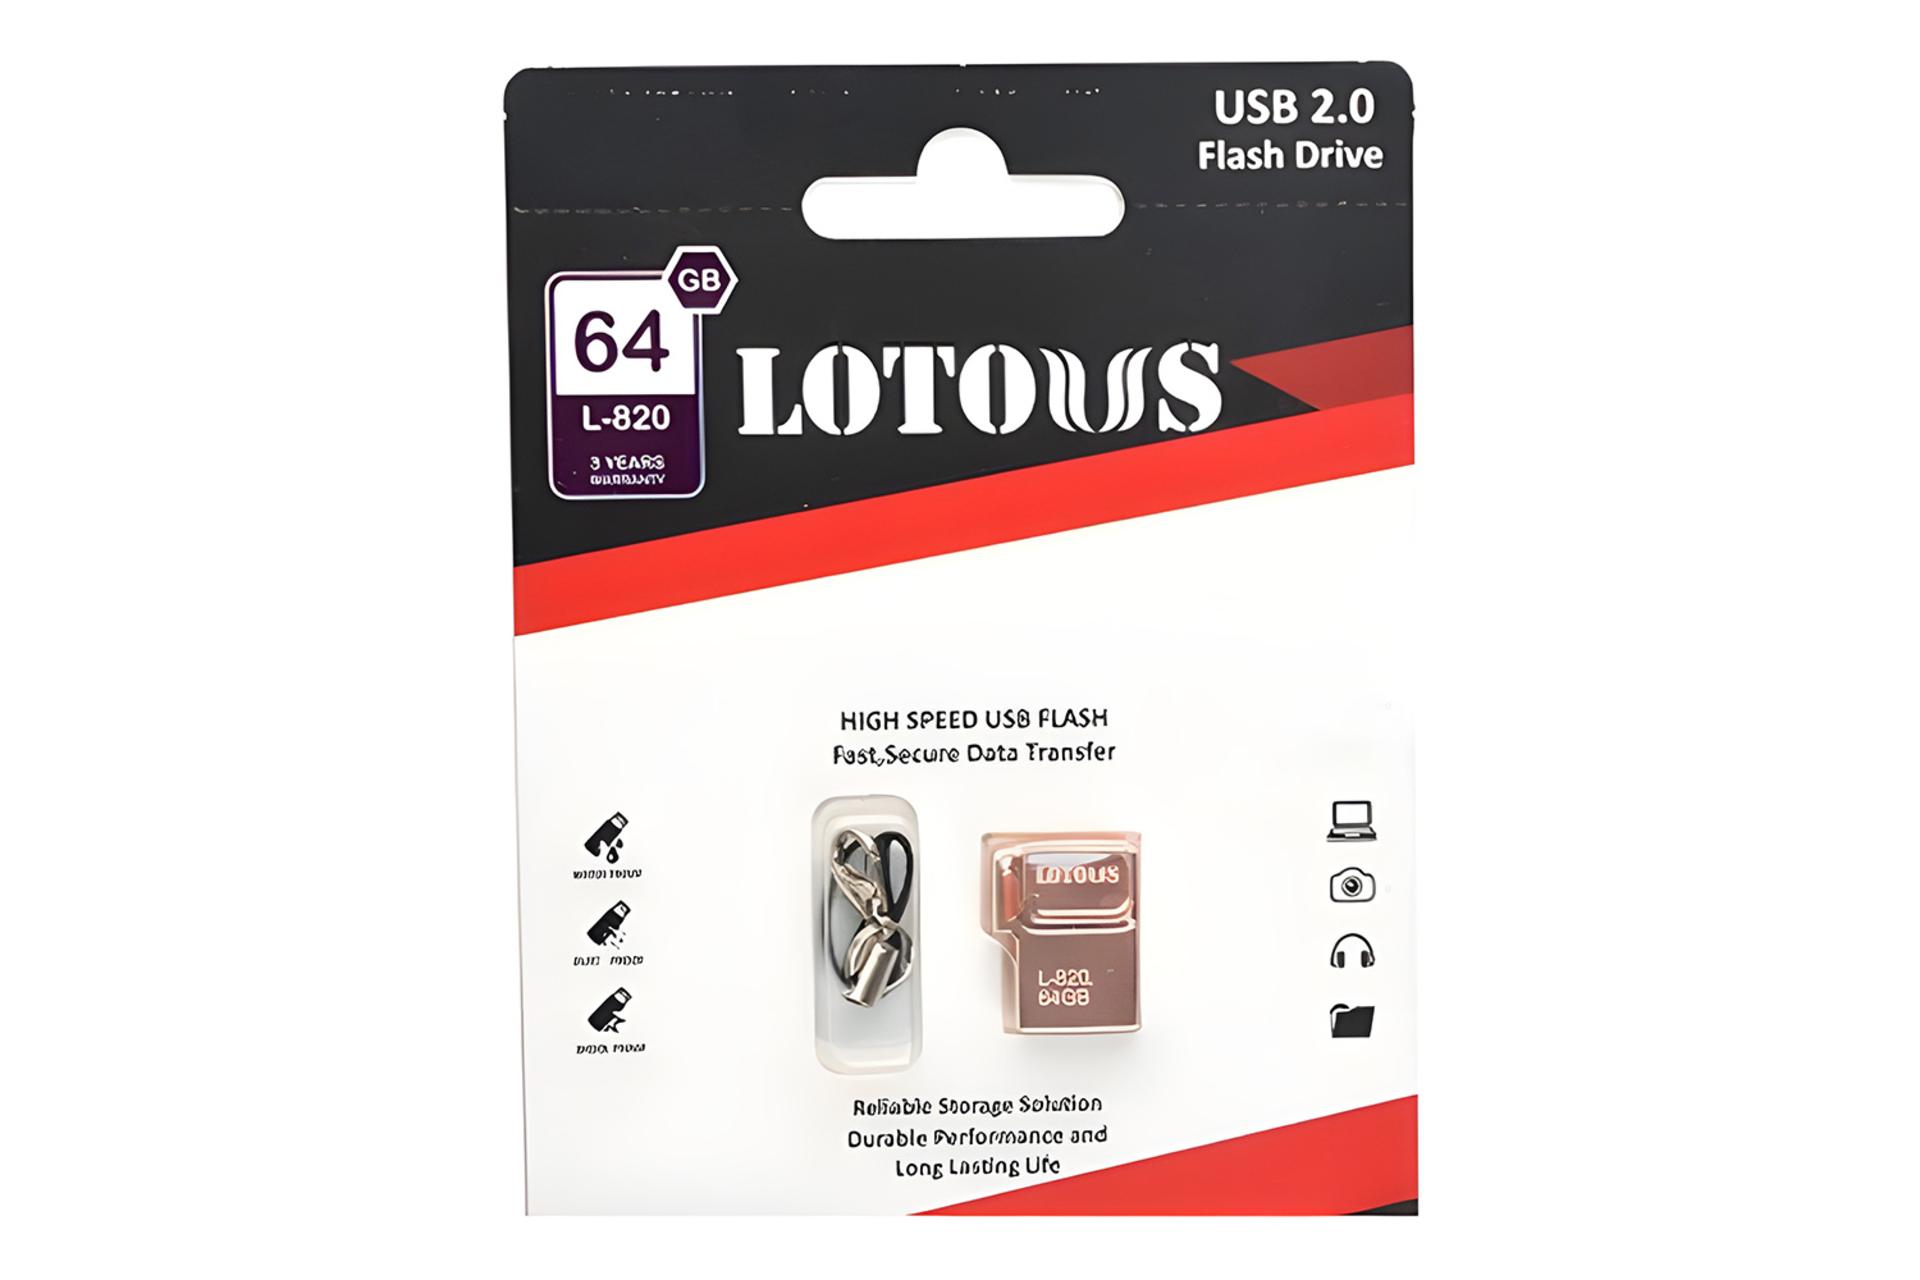 جعبه فلش مموری لوتوس Lotous L-820 64GB USB 2.0